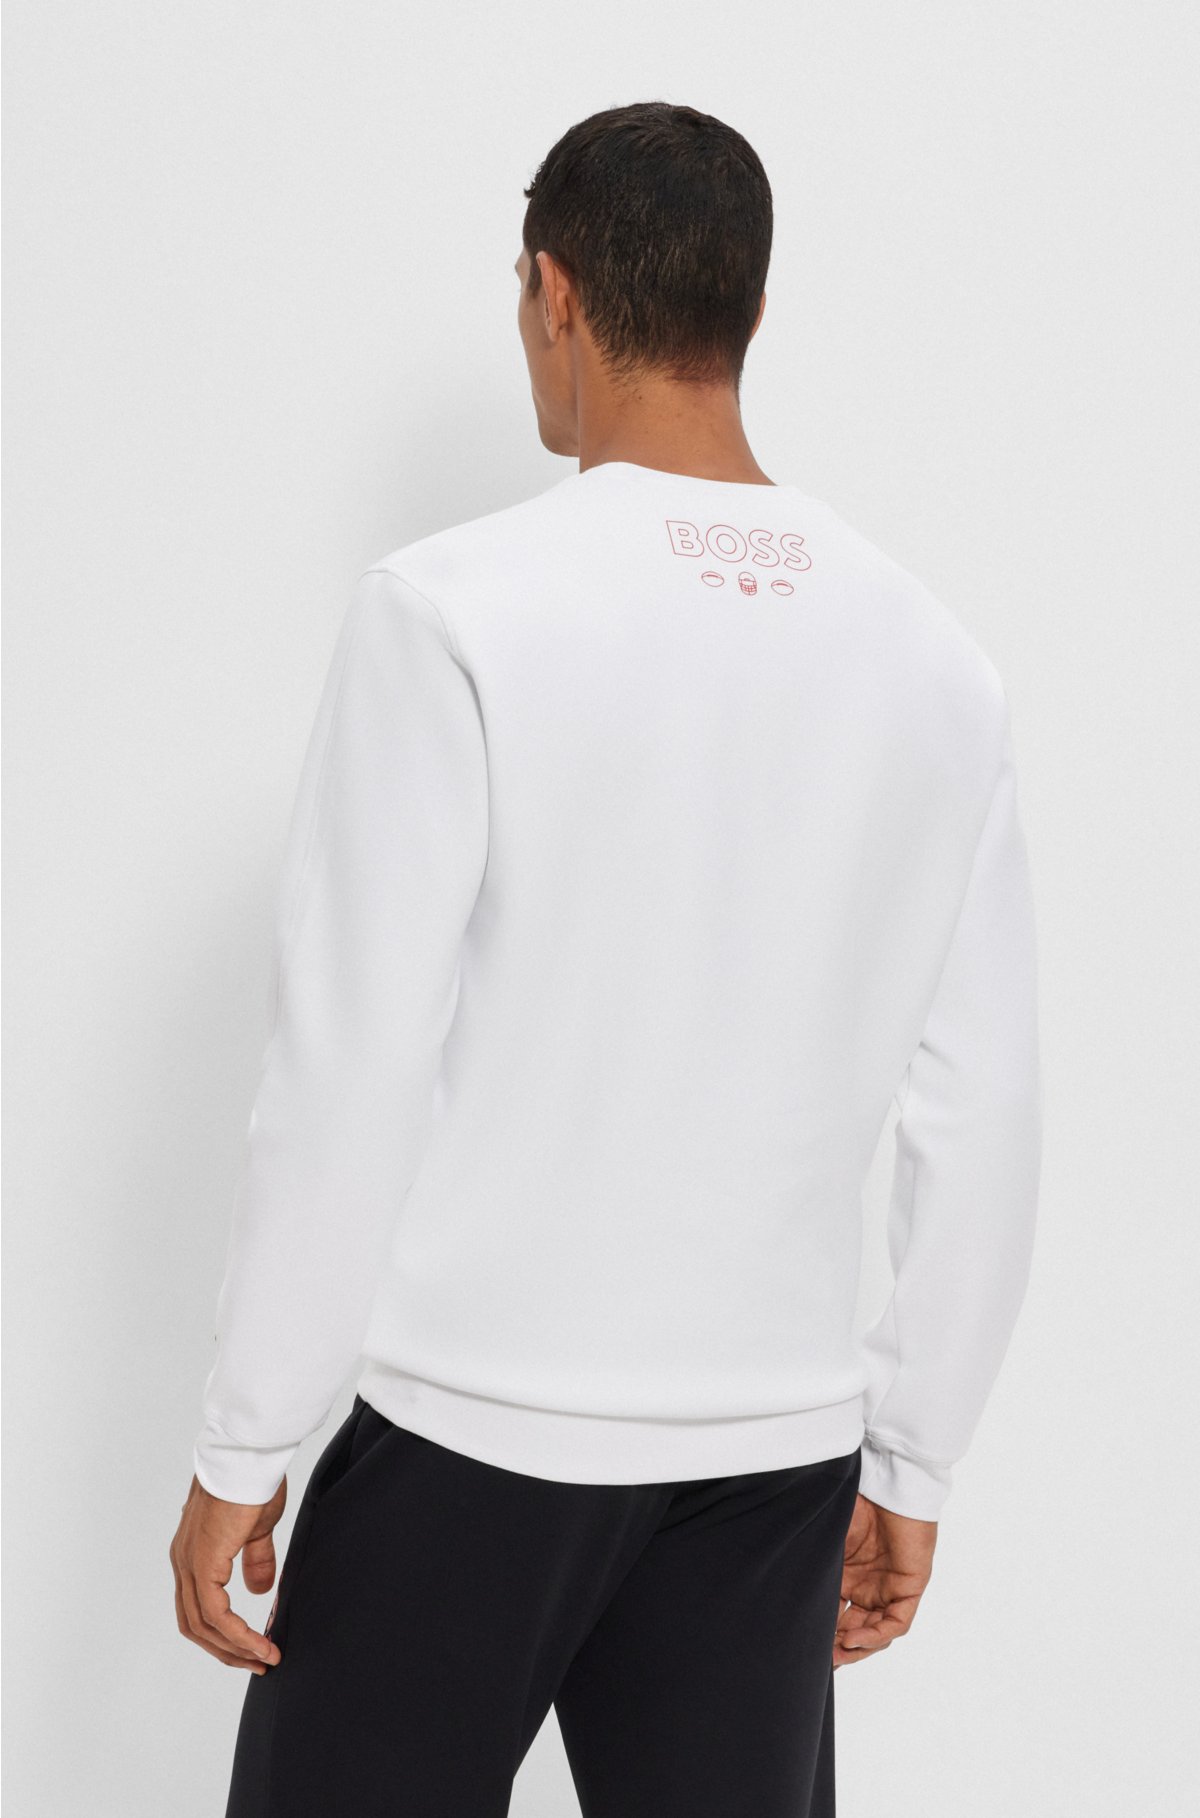 BOSS x NFL cotton-blend sweatshirt with collaborative branding, Chiefs